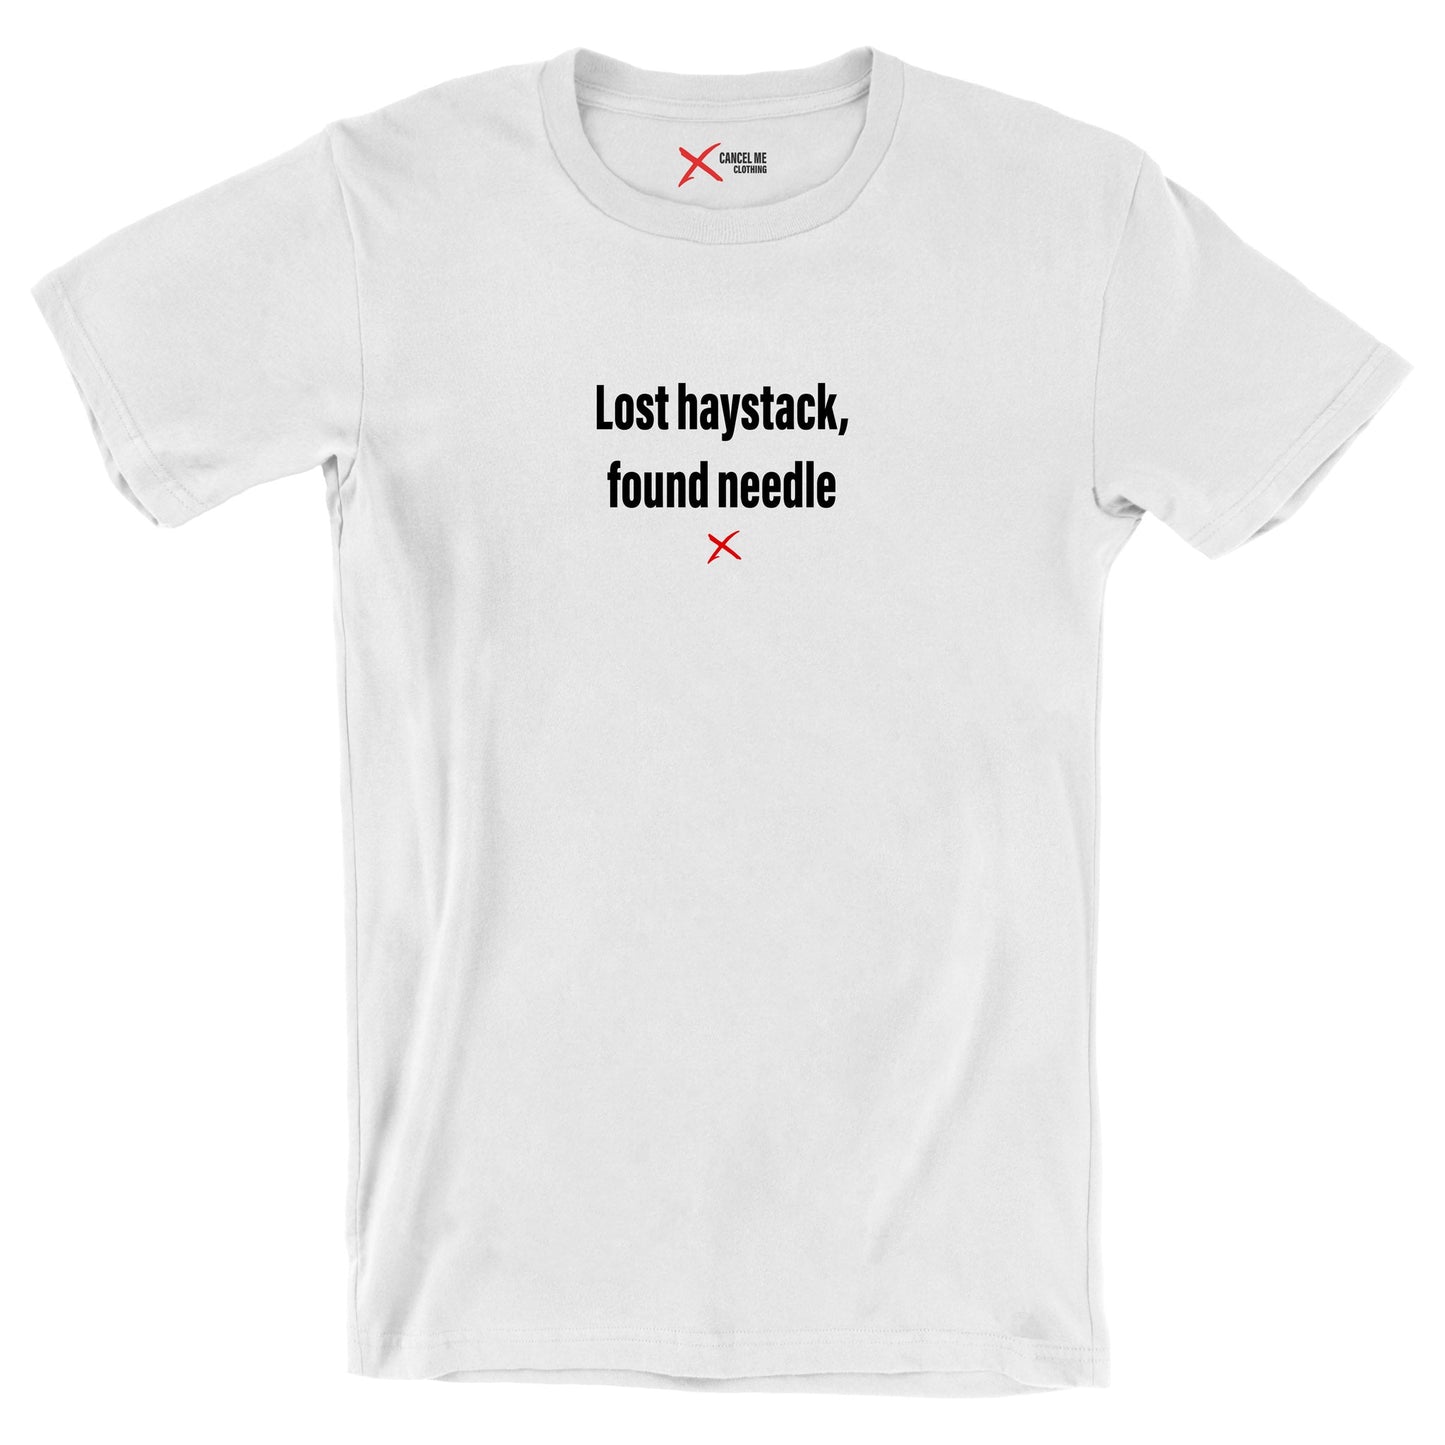 Lost haystack, found needle - Shirt